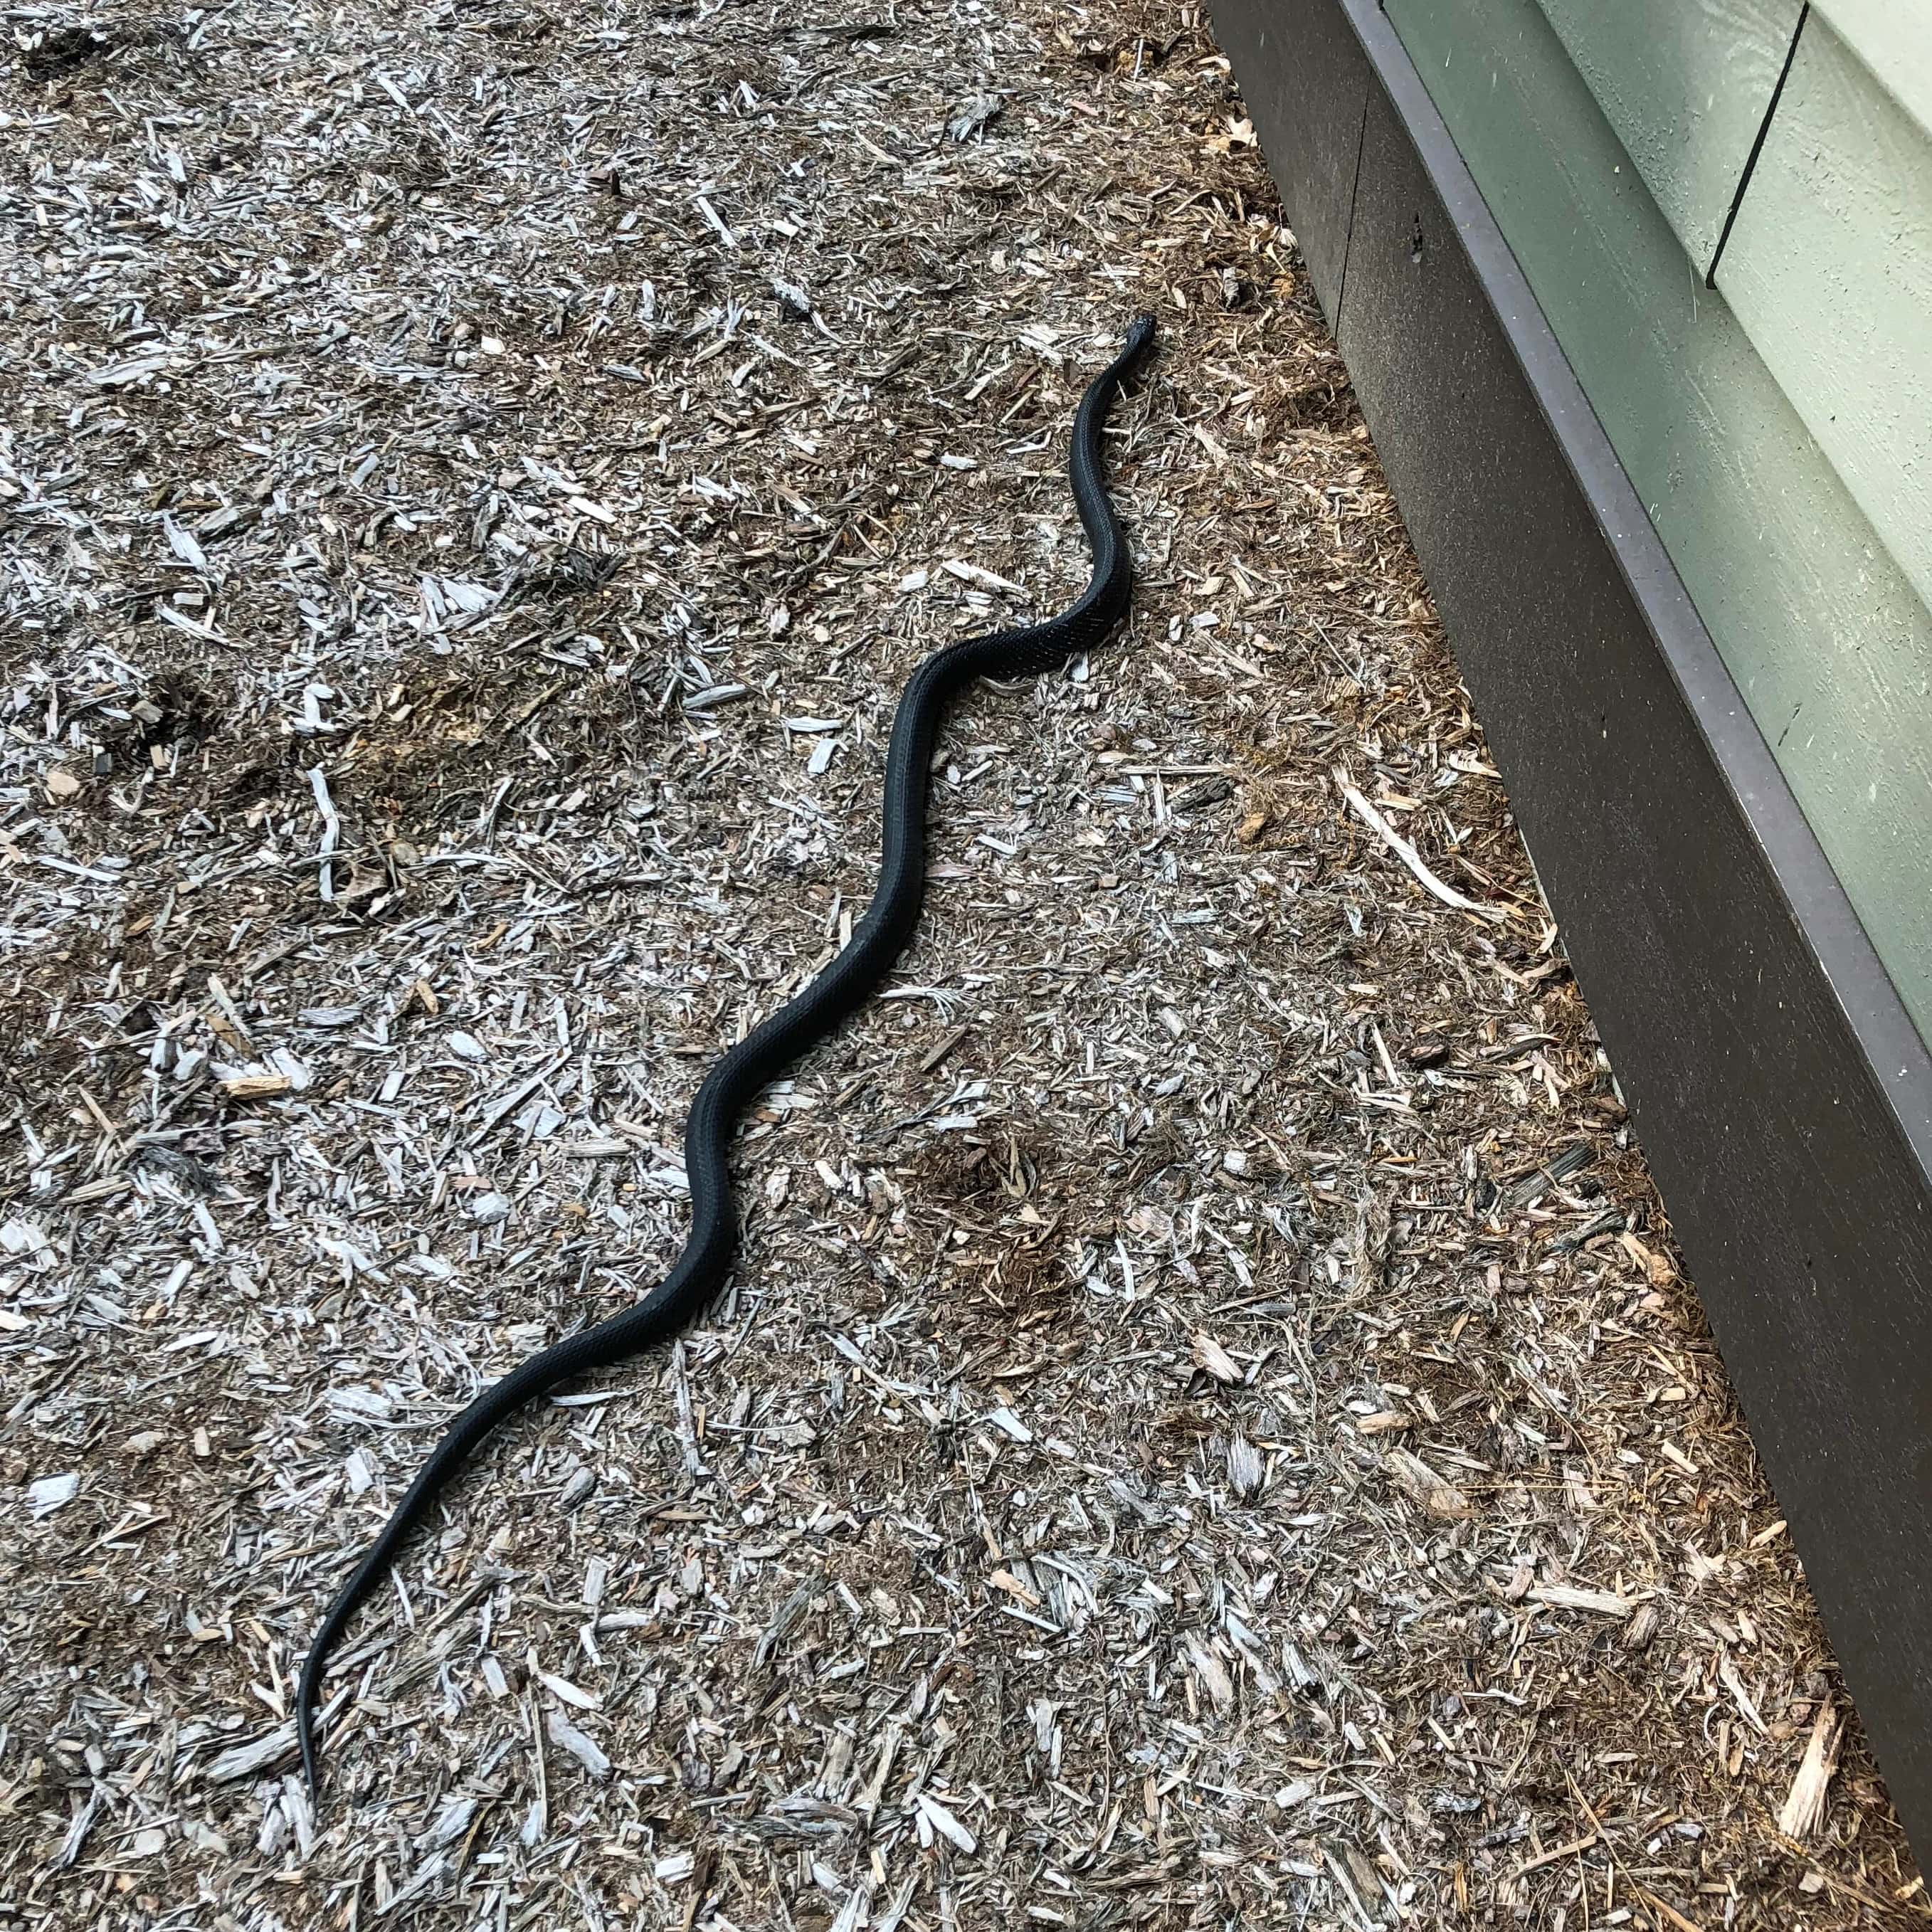 A rat snake slithering on the ground